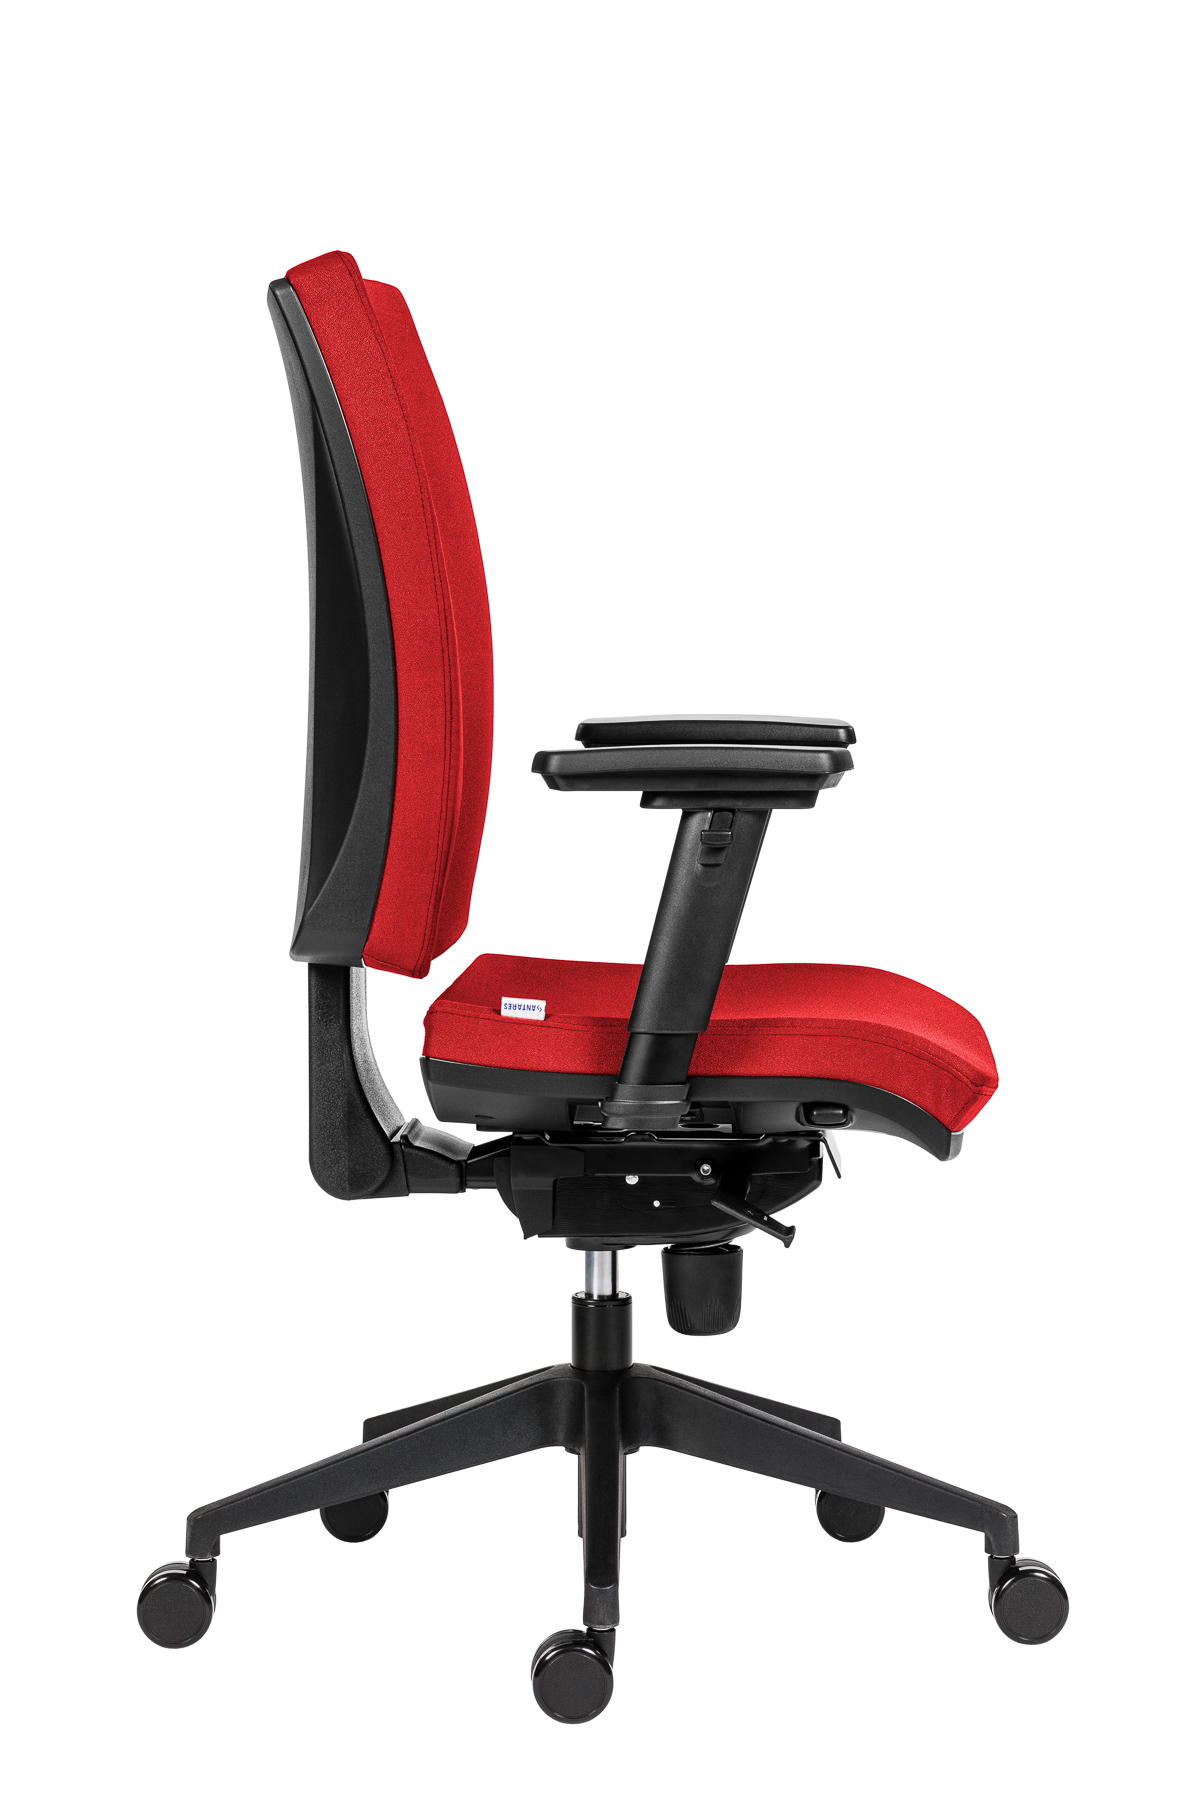 Kancelářská židle 1580 SYN GALA PLUS SL BN14 + AR08